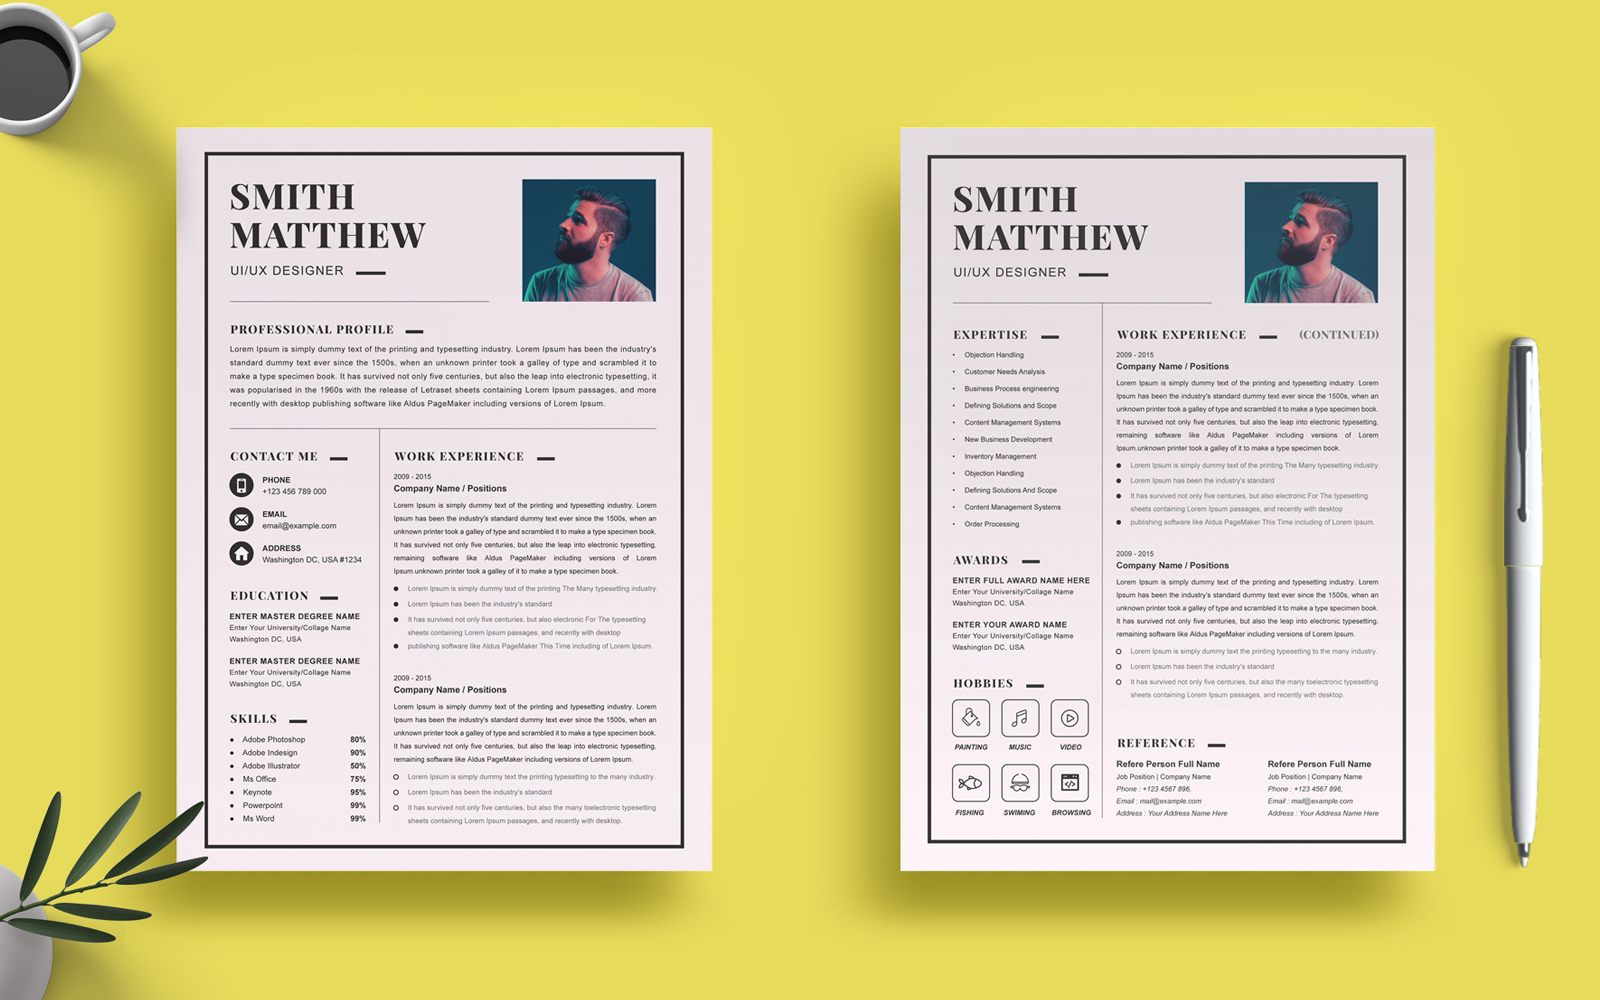 Smith Matthew - UI/UX Designer Resume